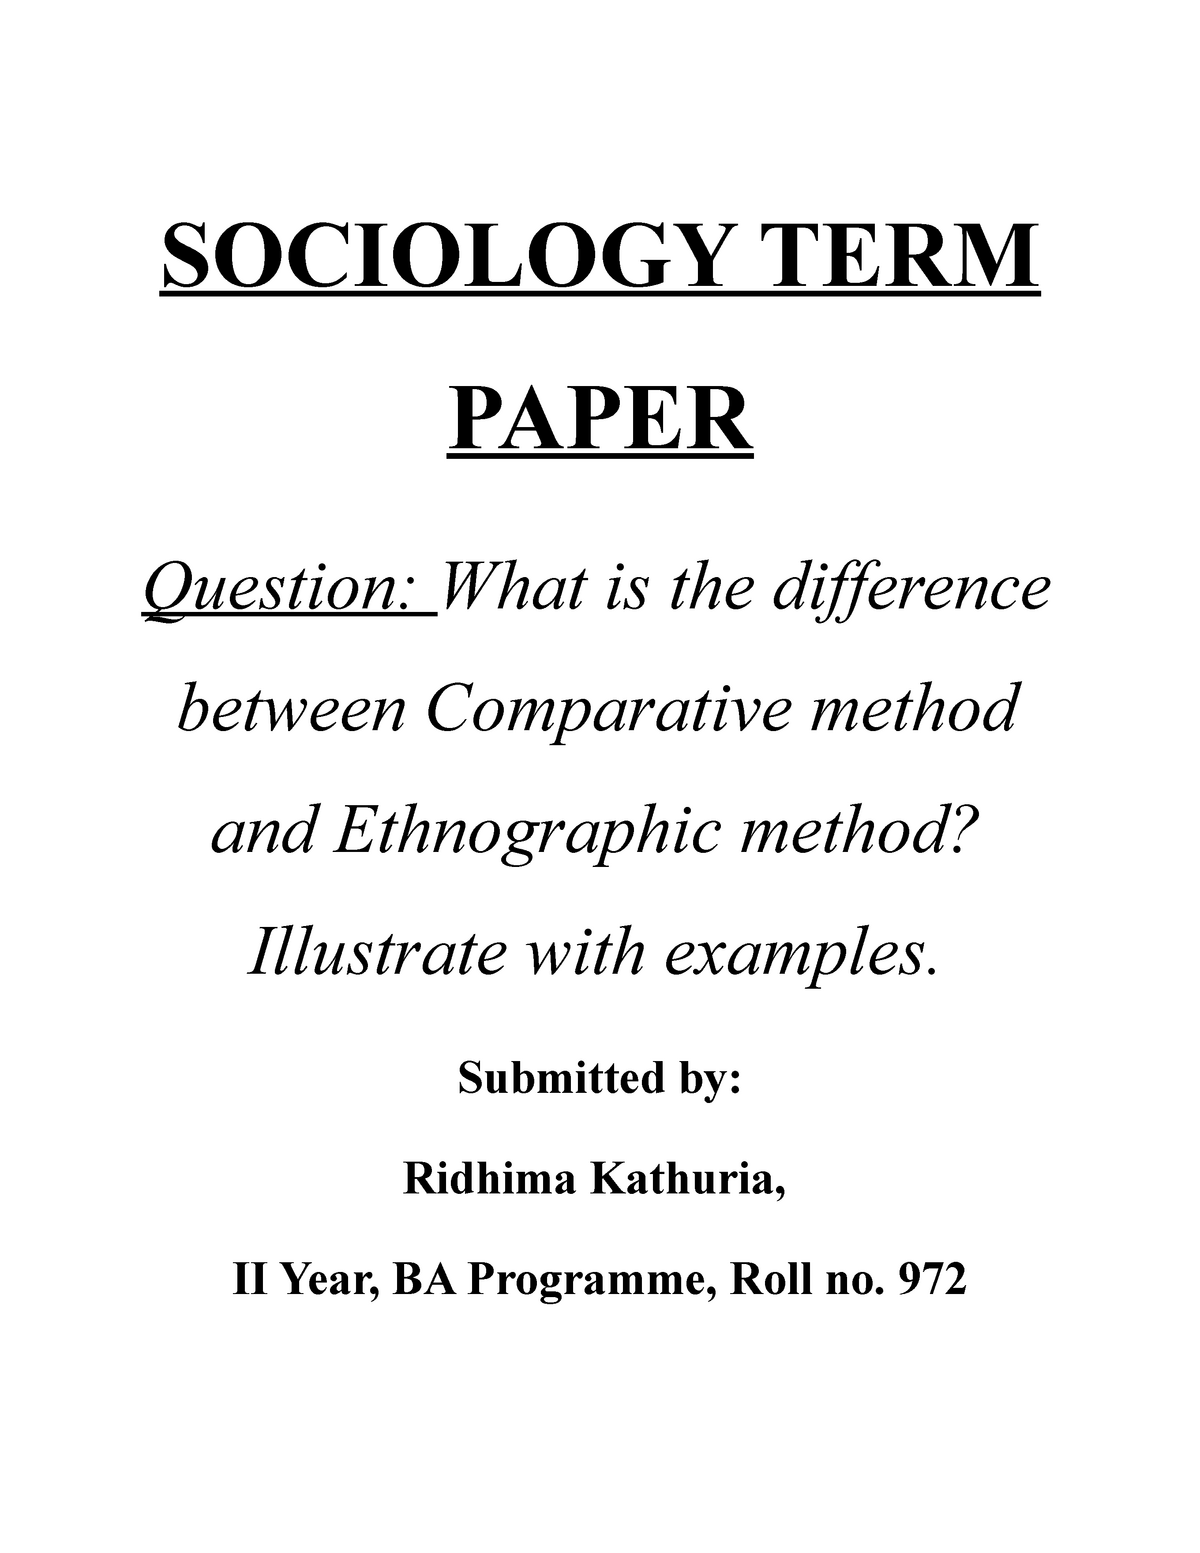 a sociology term paper